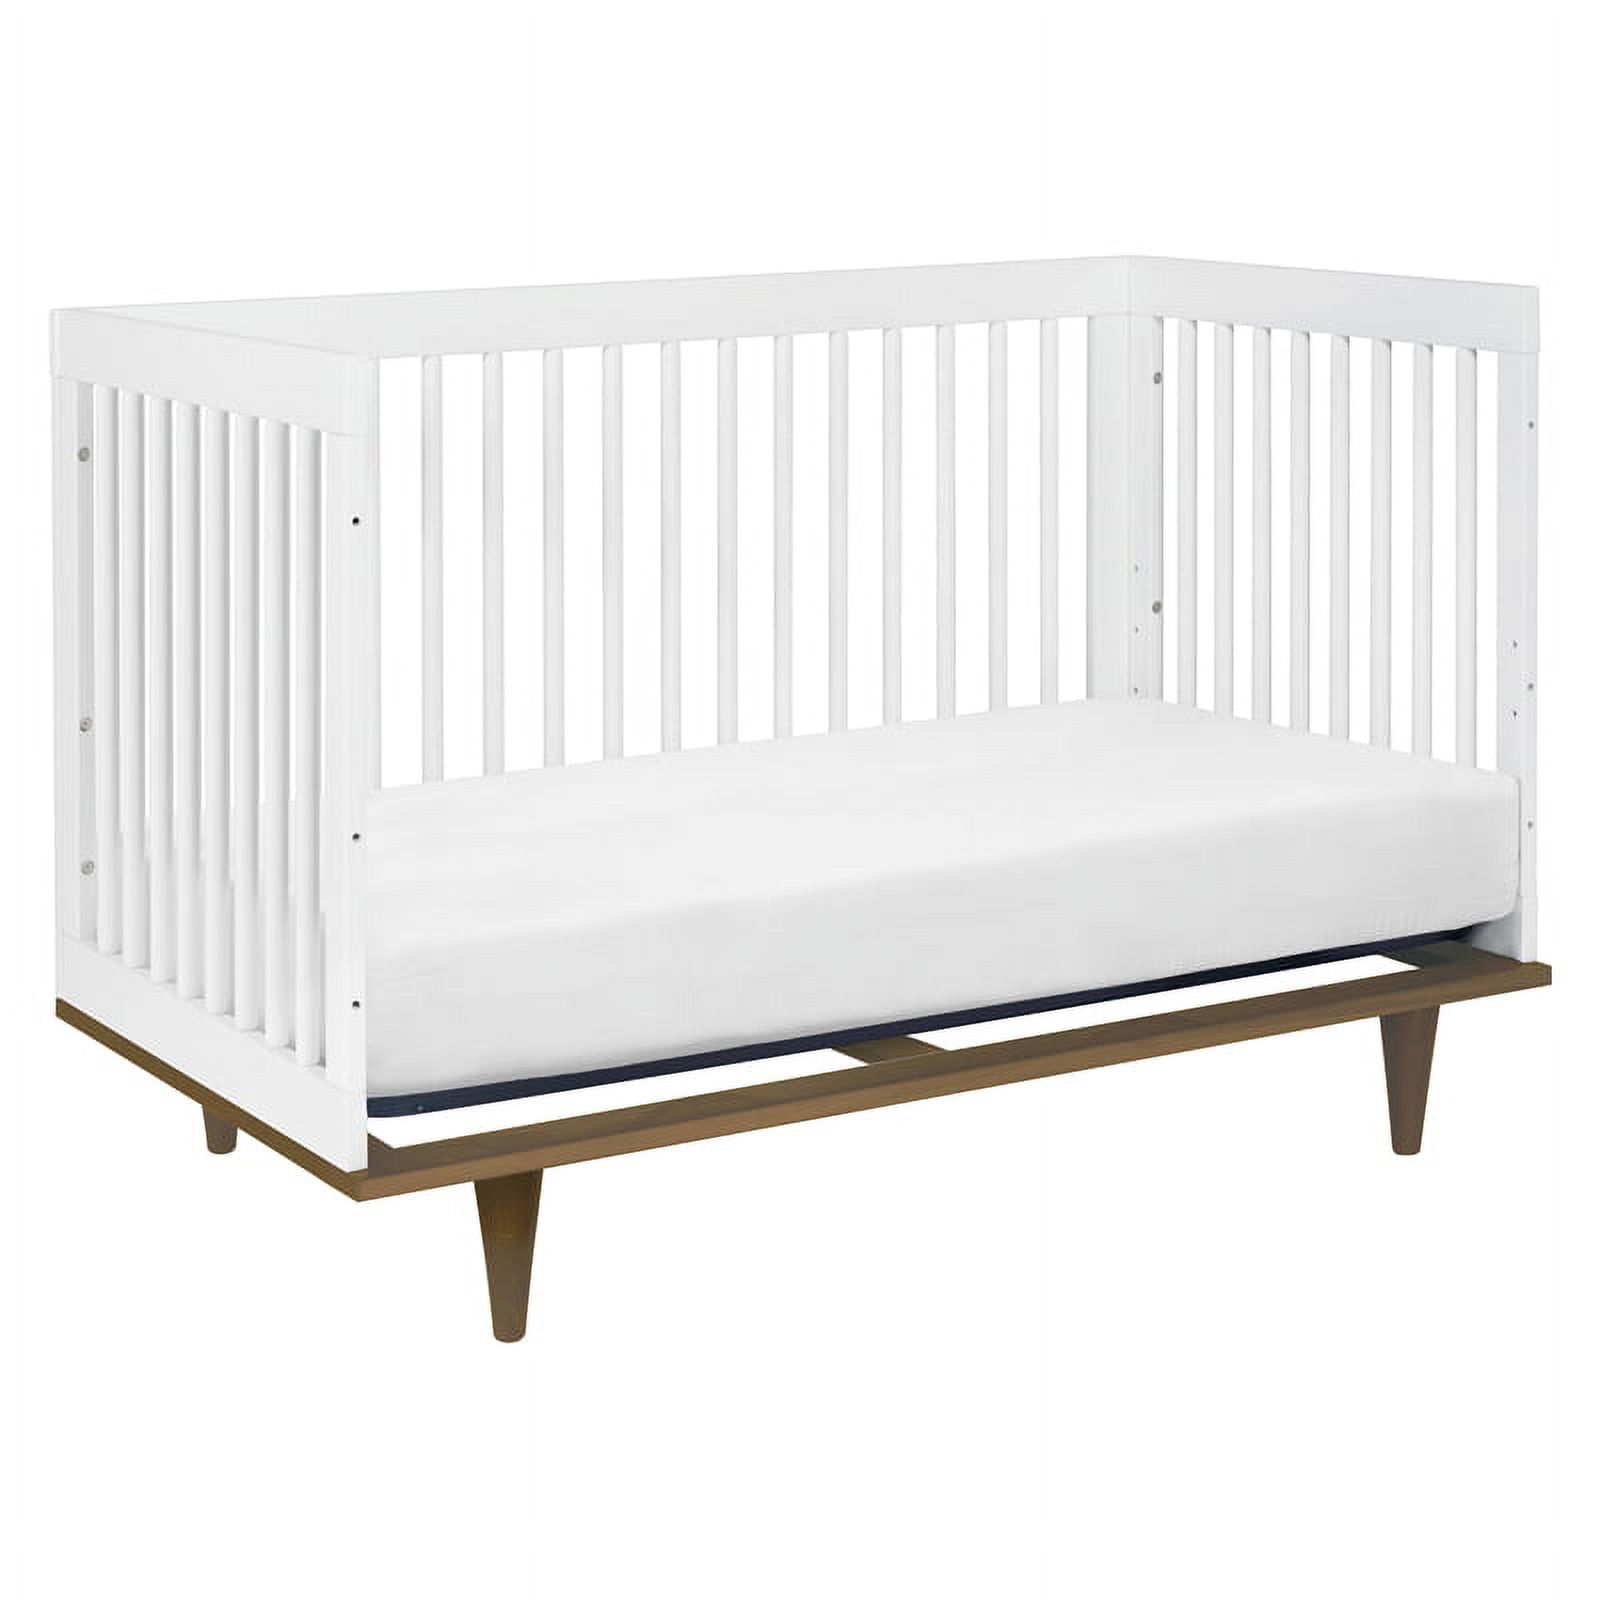 Davinci Marley Modern Pine Wood 3-In-1 Convertible Crib in White/Walnut - image 4 of 10